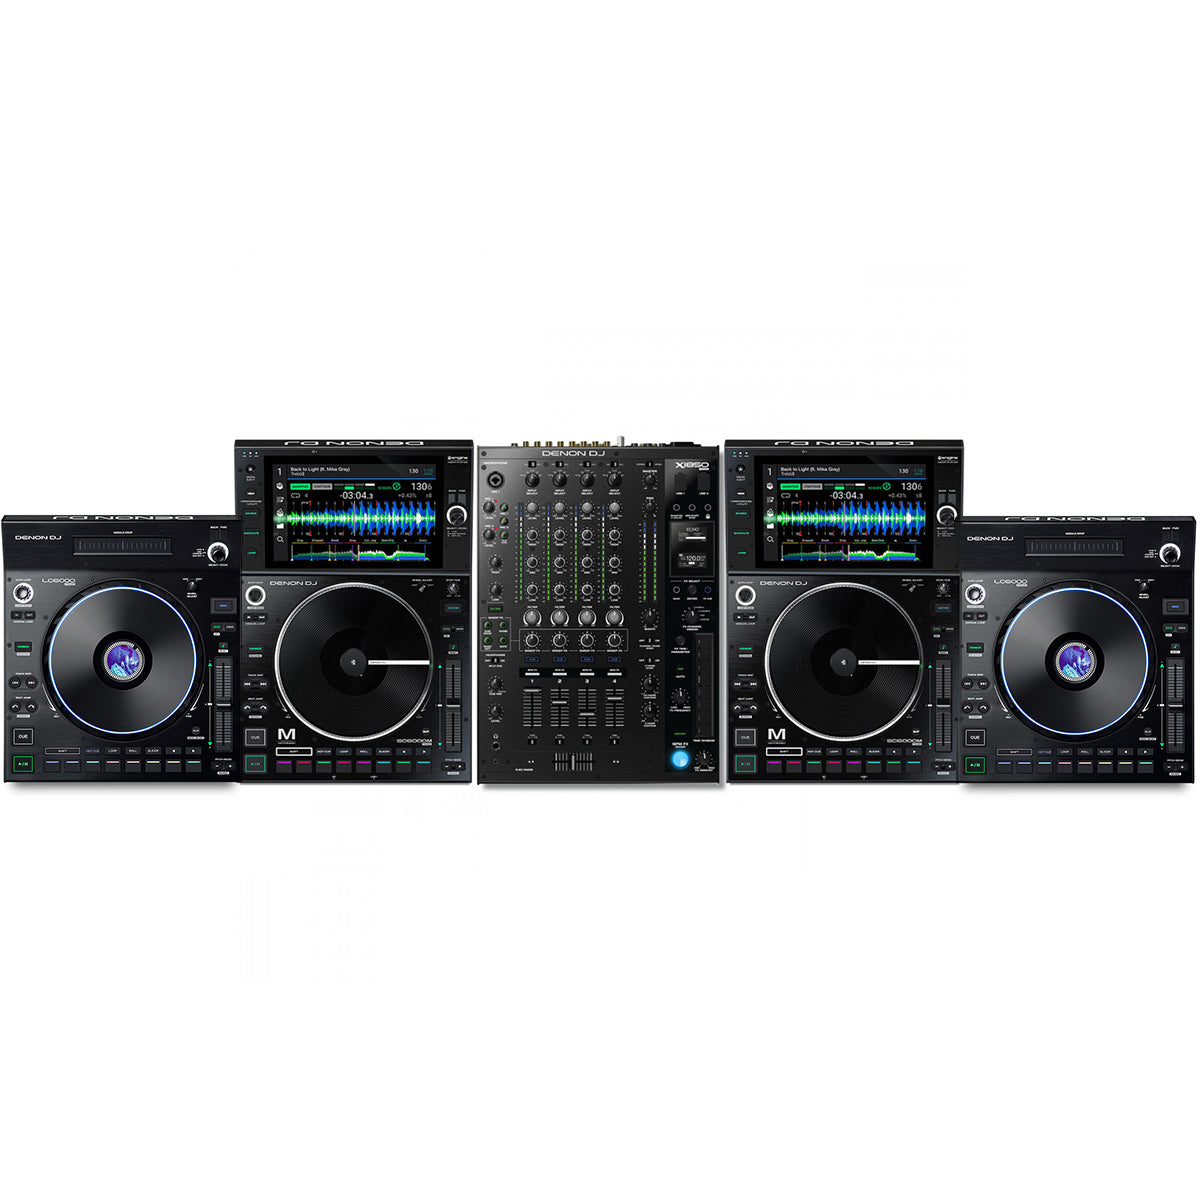 Denon DJ SC6000M Complete Bundle with FREE LC6000 Pair